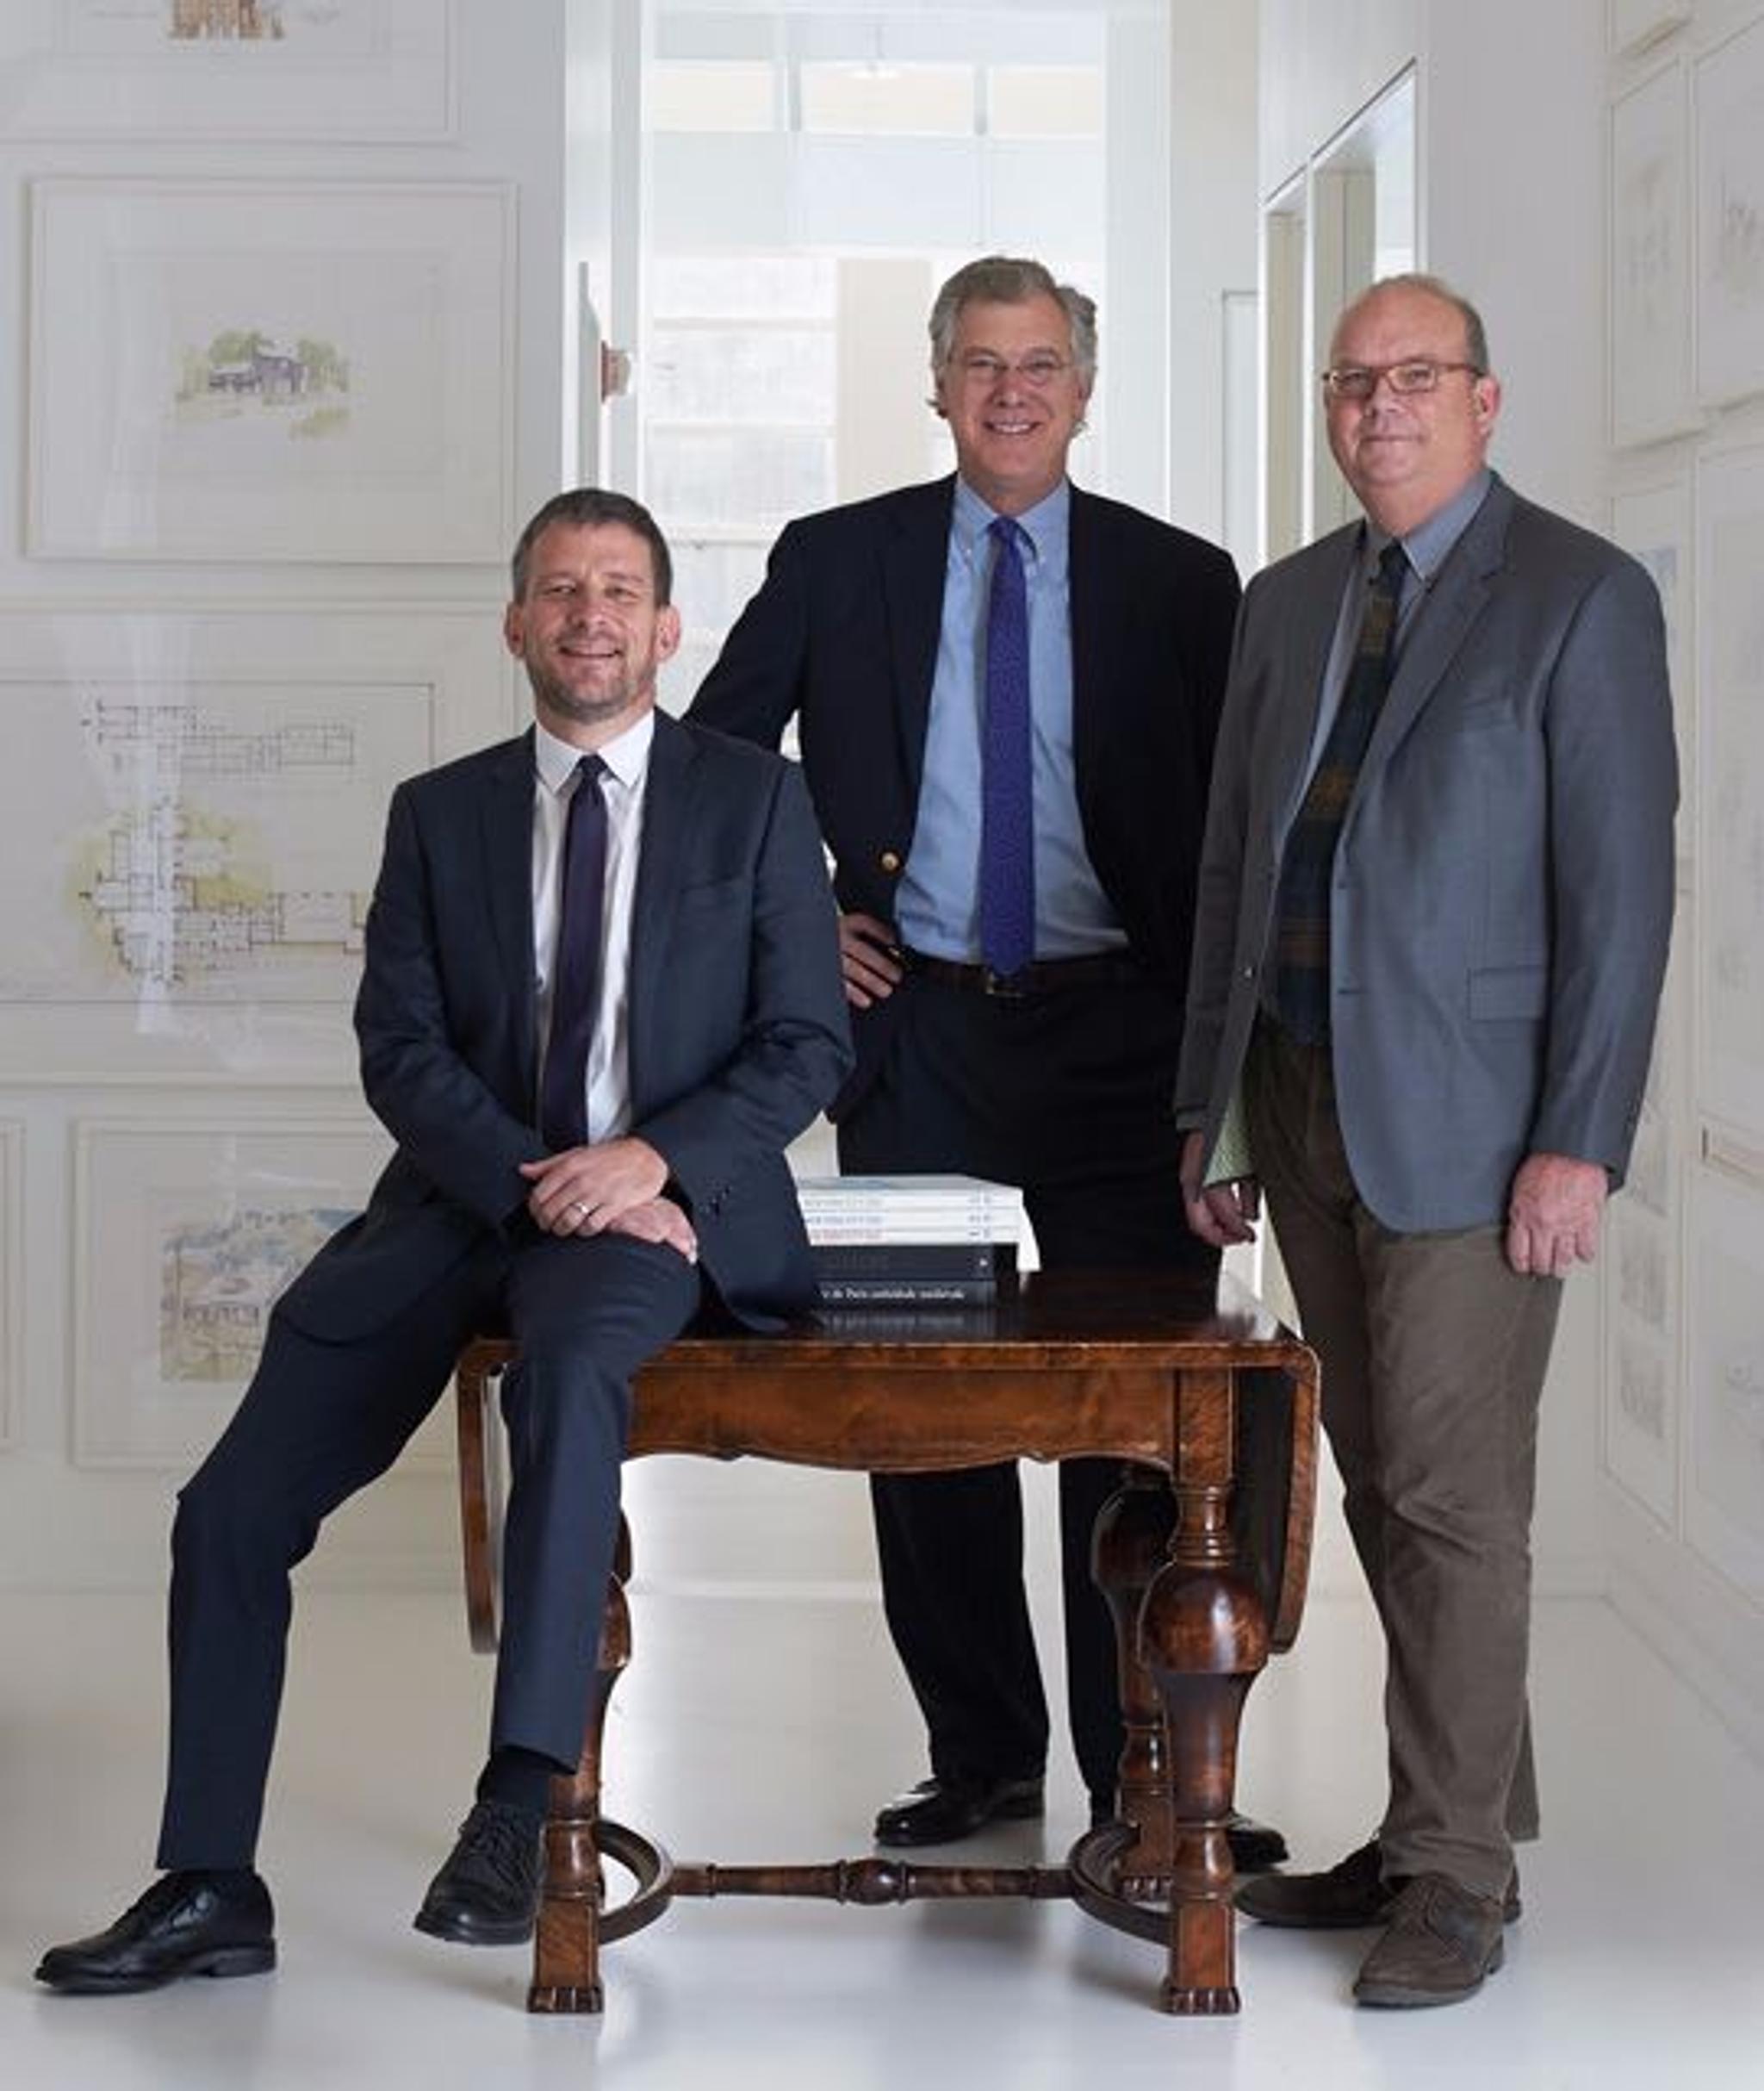 The three founders of the firm: John Ike, Thomas Kligerman and Joel Barkley.